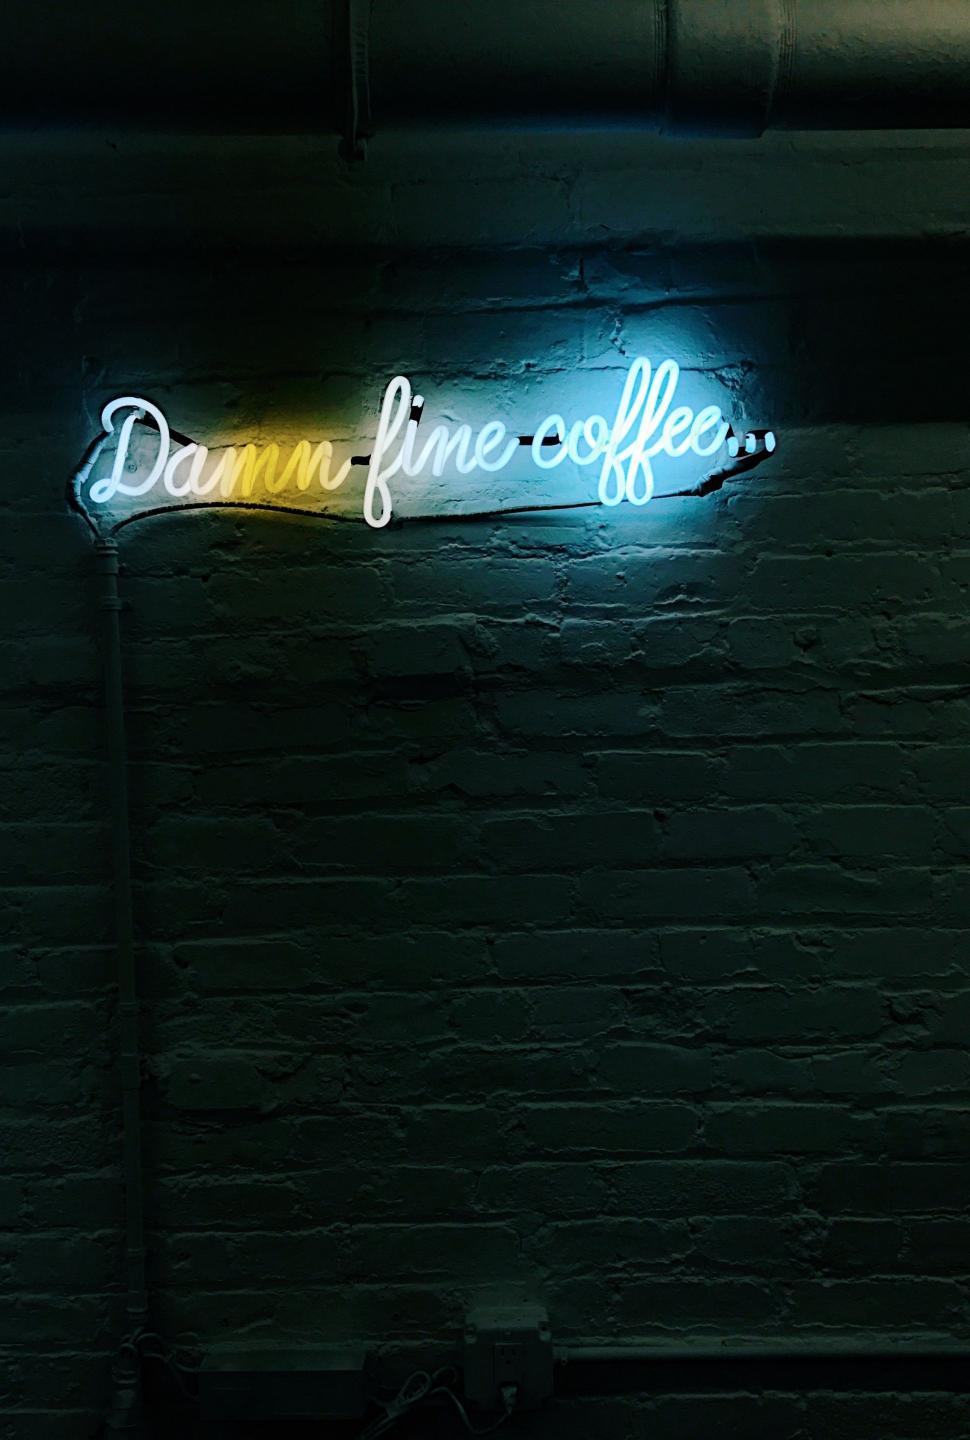 Free Image of Neon Sign Illuminating Brick Wall in Dark Room 